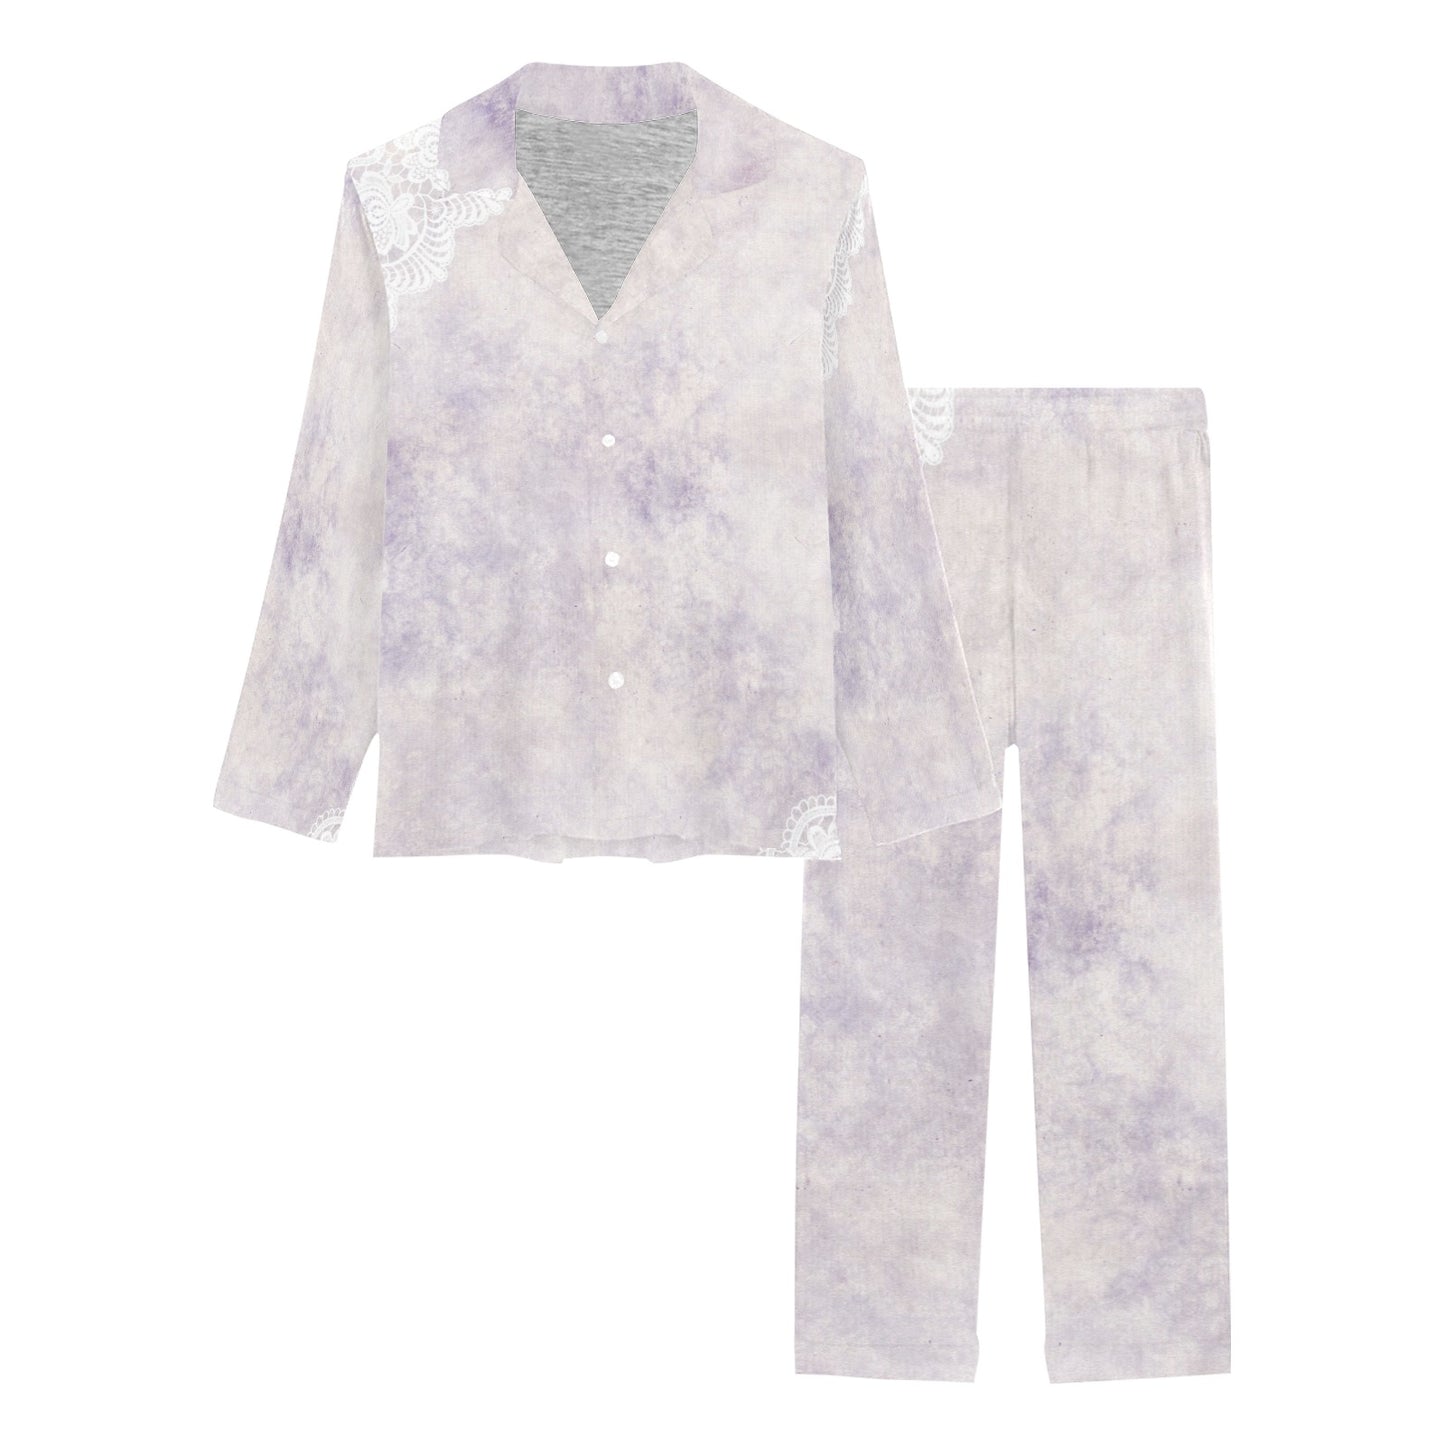 Victorian printed lace pajama set, design 40 Women's Long Pajama Set (Sets 02)